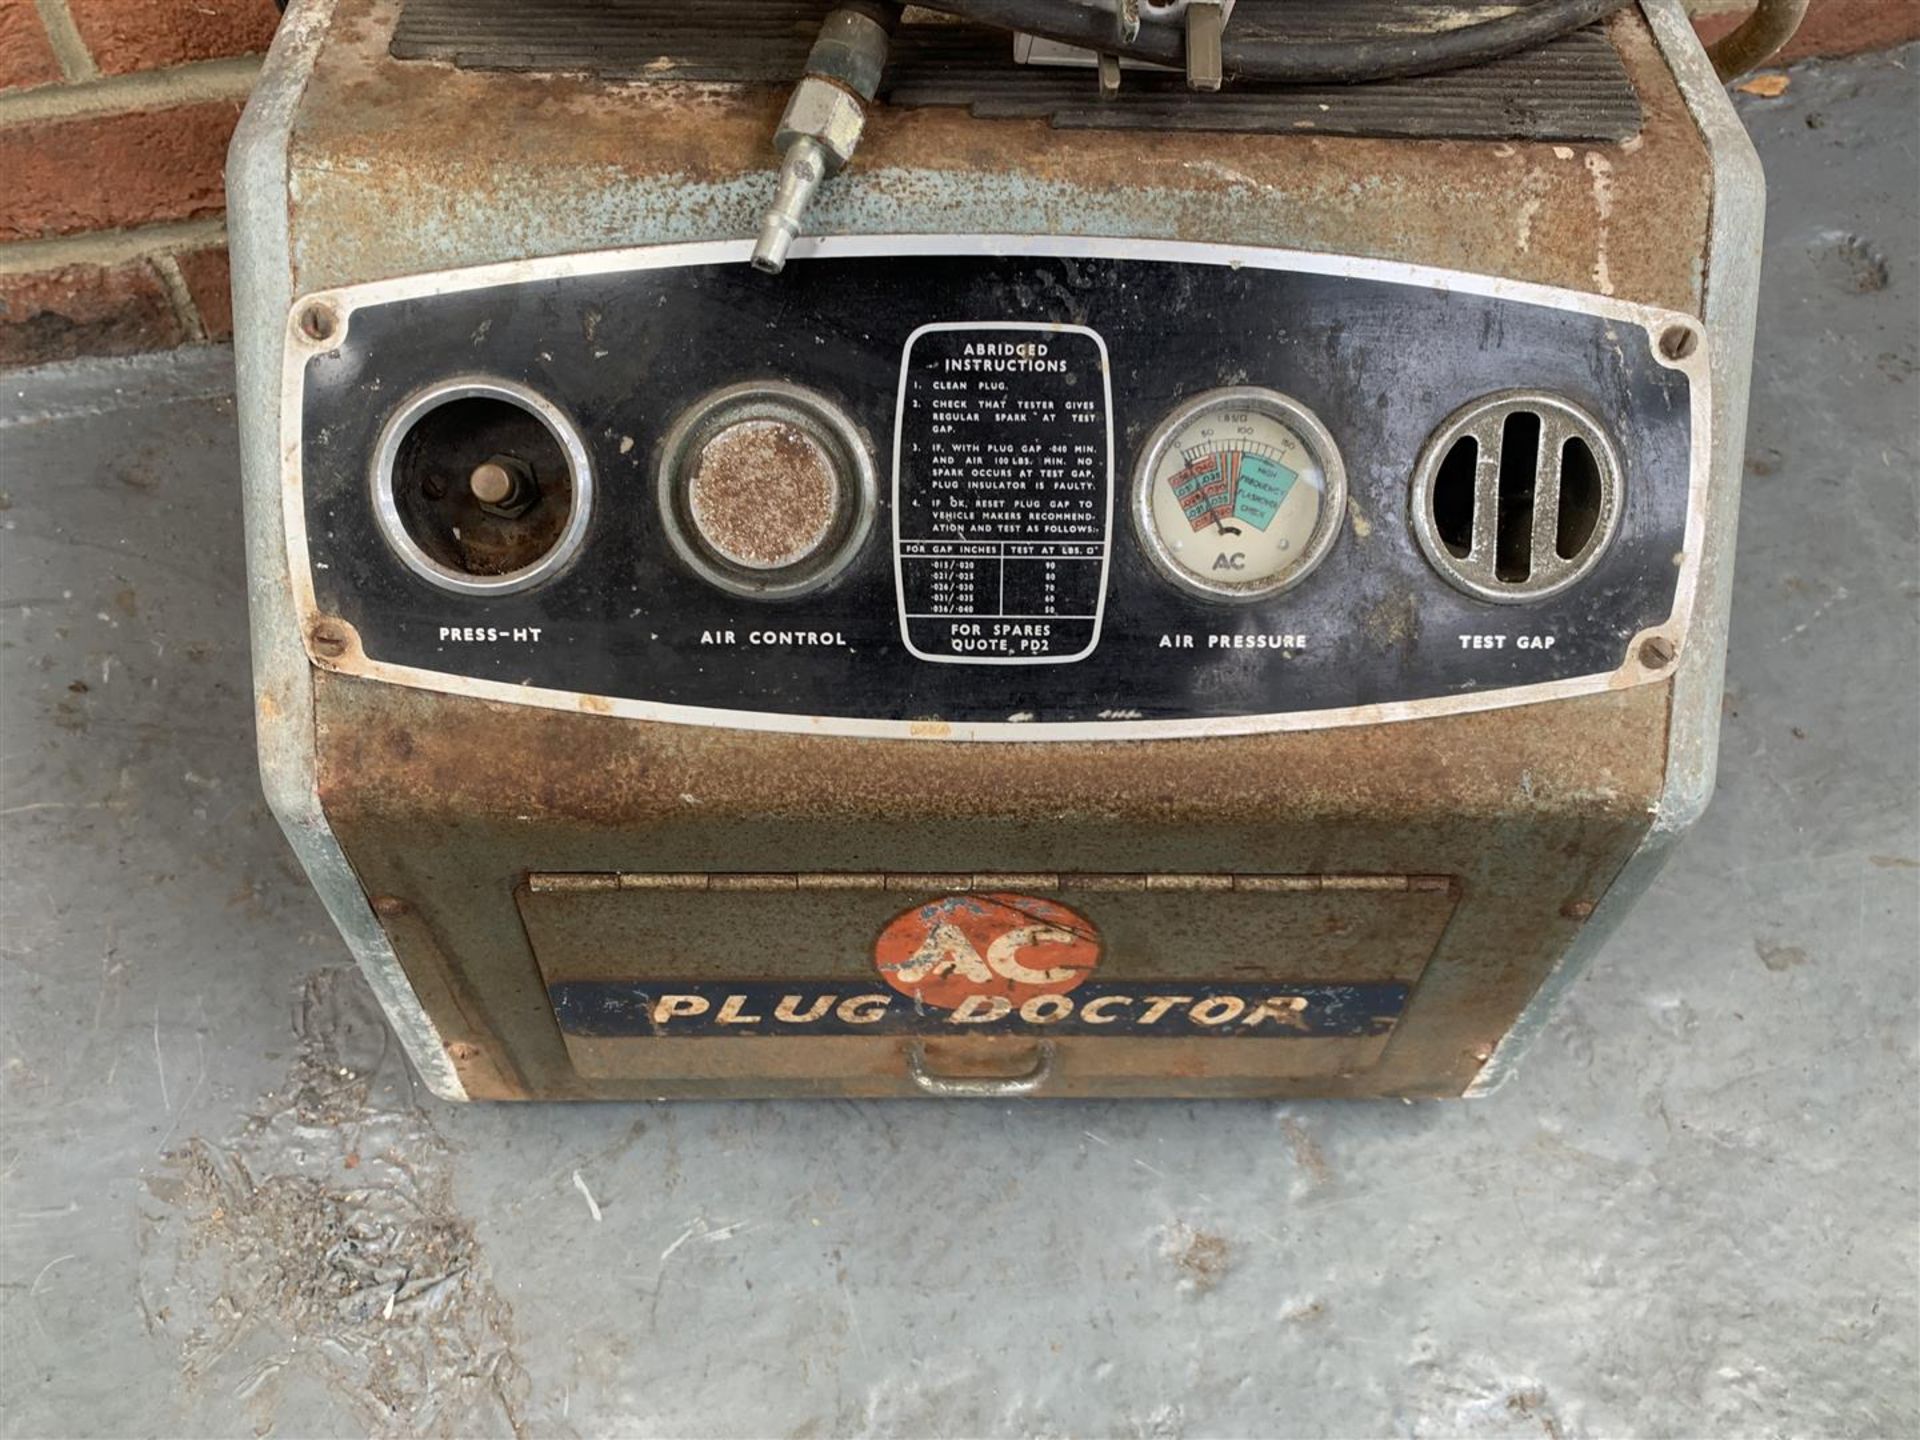 Vintage AC Plug Doctor - Image 2 of 5